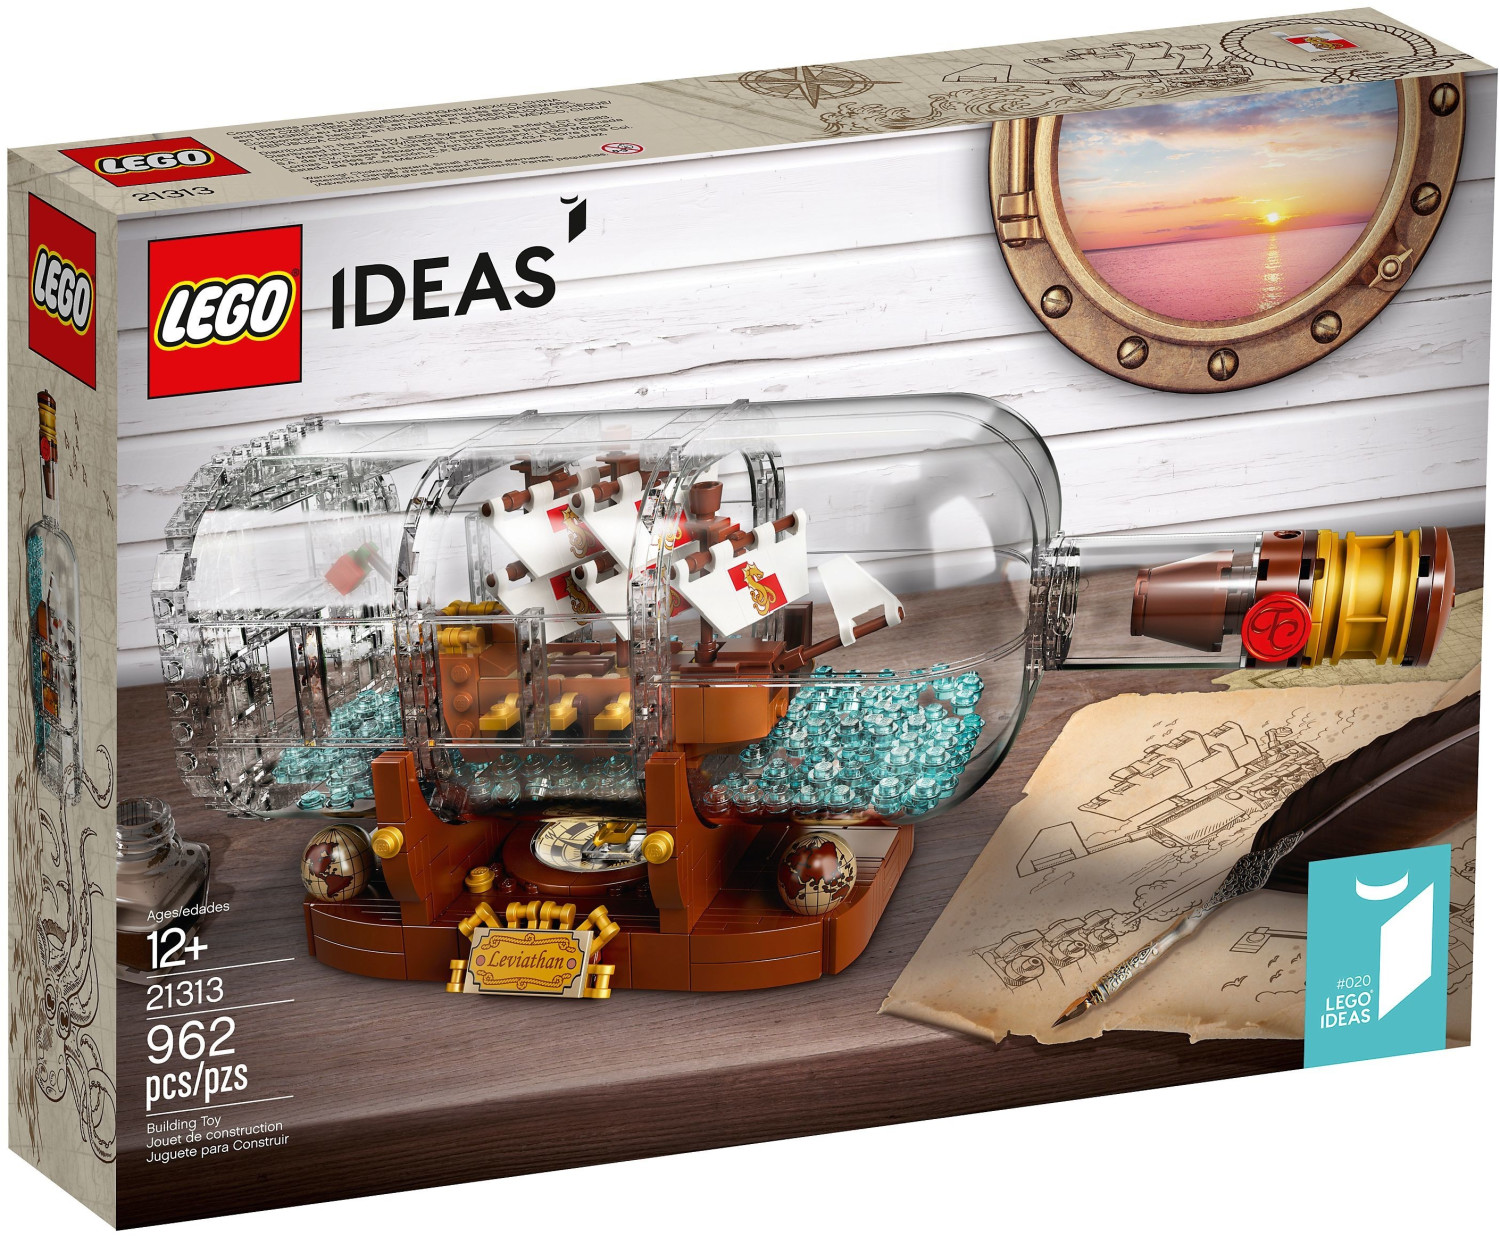 Immagine relativa a LEGO 21313 - Schiff in der Flasche 